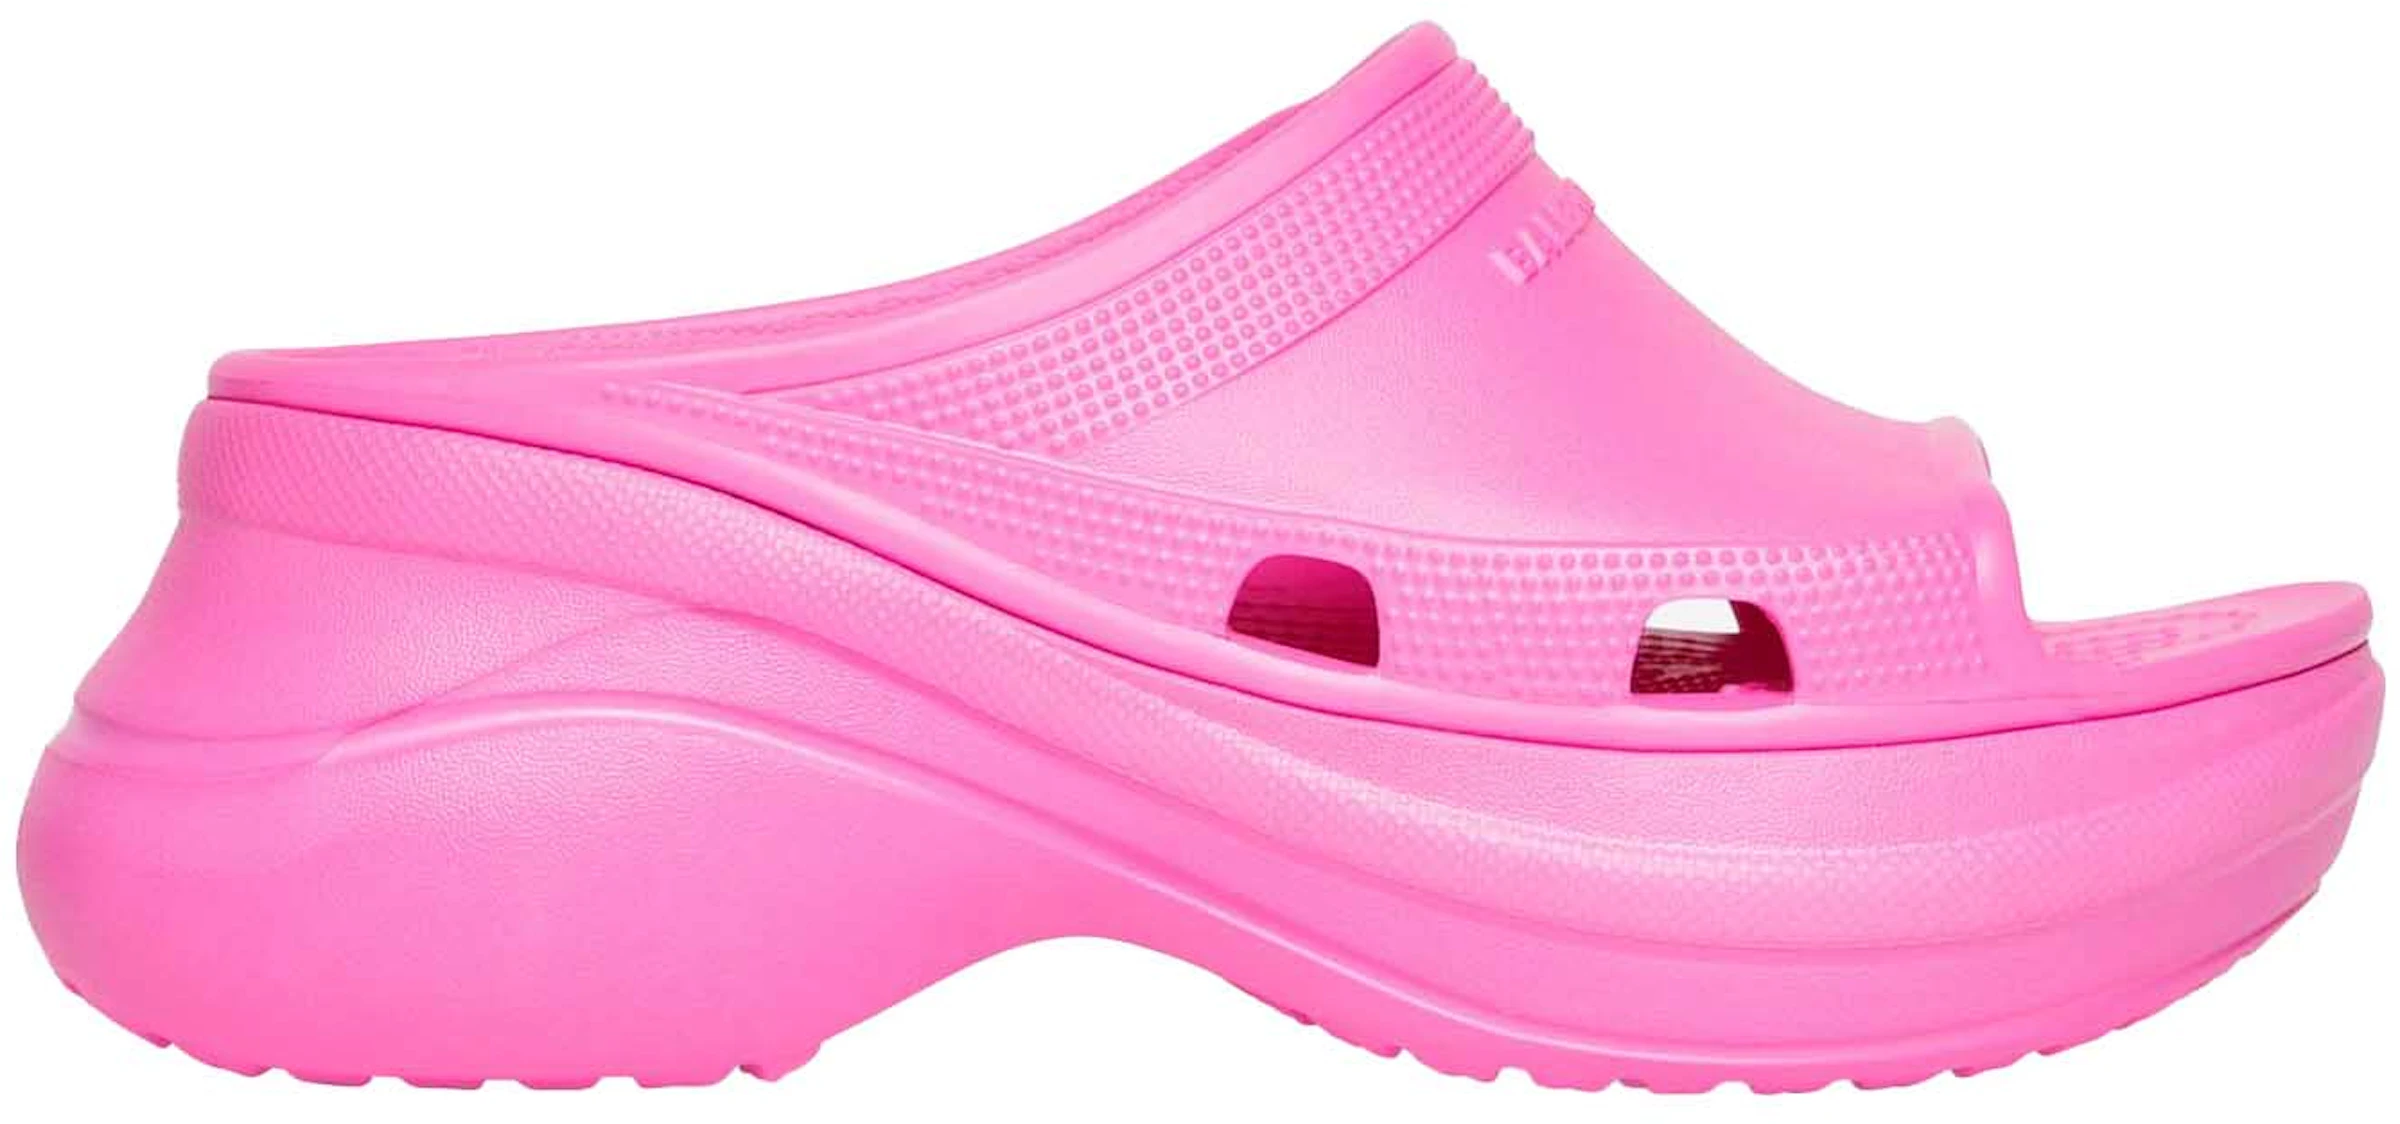 Balenciaga x Crocs Pool Slide Sandals Pink (Women's) - 677389W1S8E5300 - US